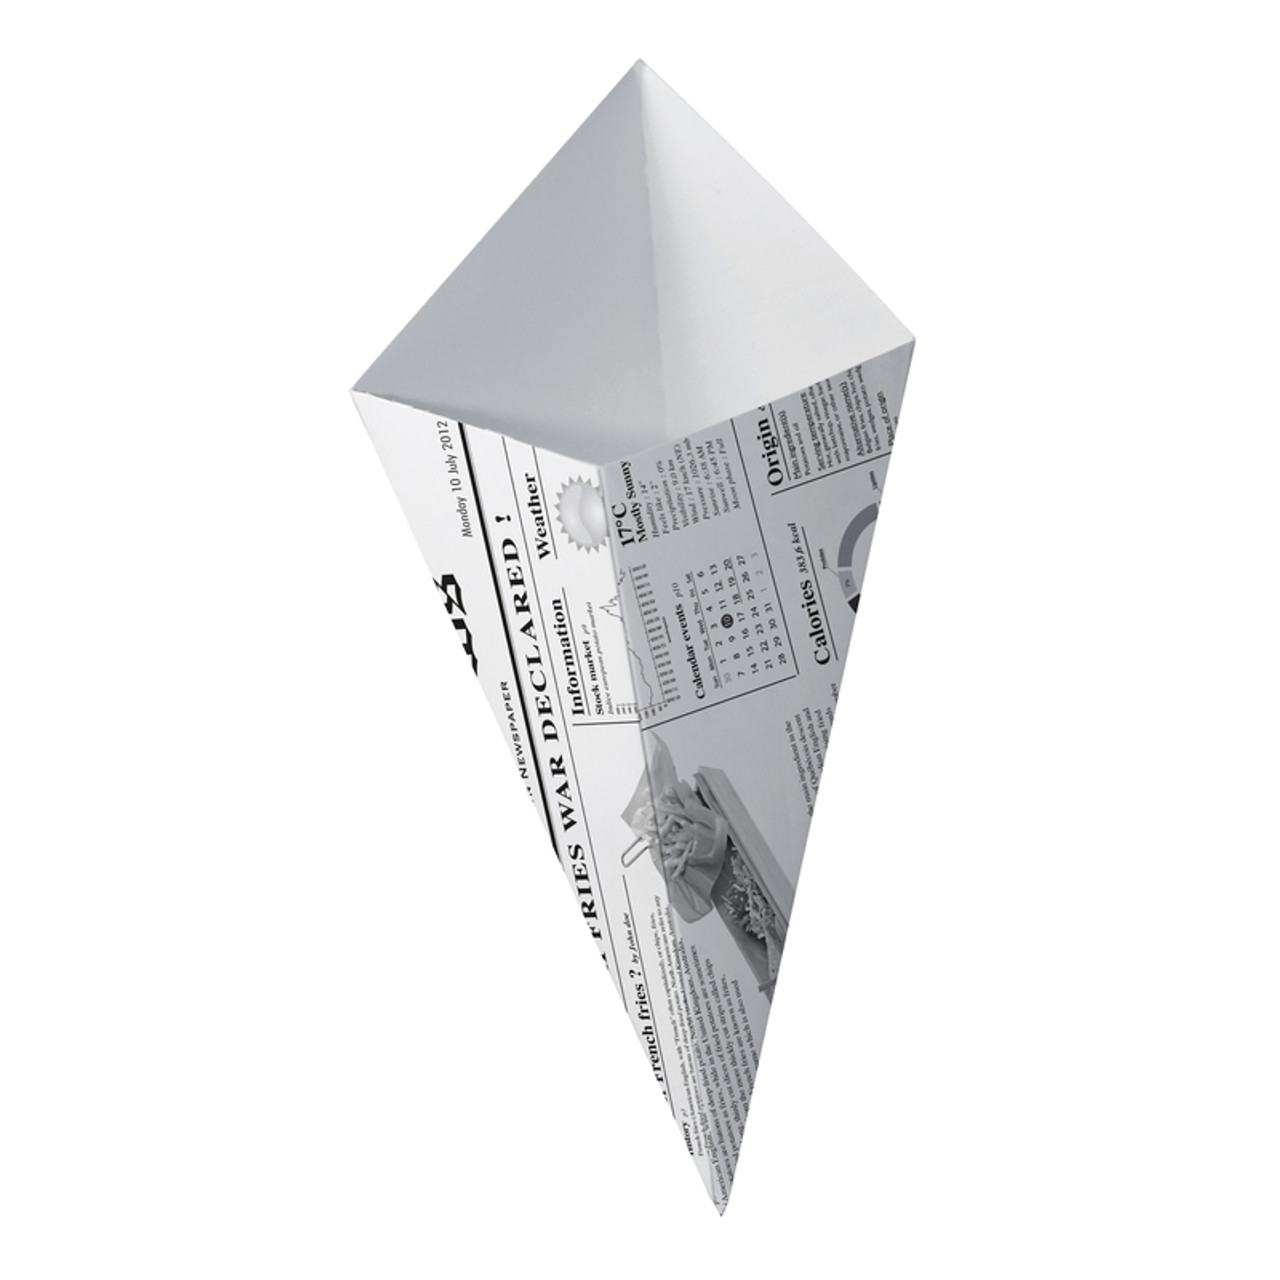 French Newspaper Paper Cones. Medium Size K-17, holds 8.5 oz. - 1465 cones,  11¢ per cone